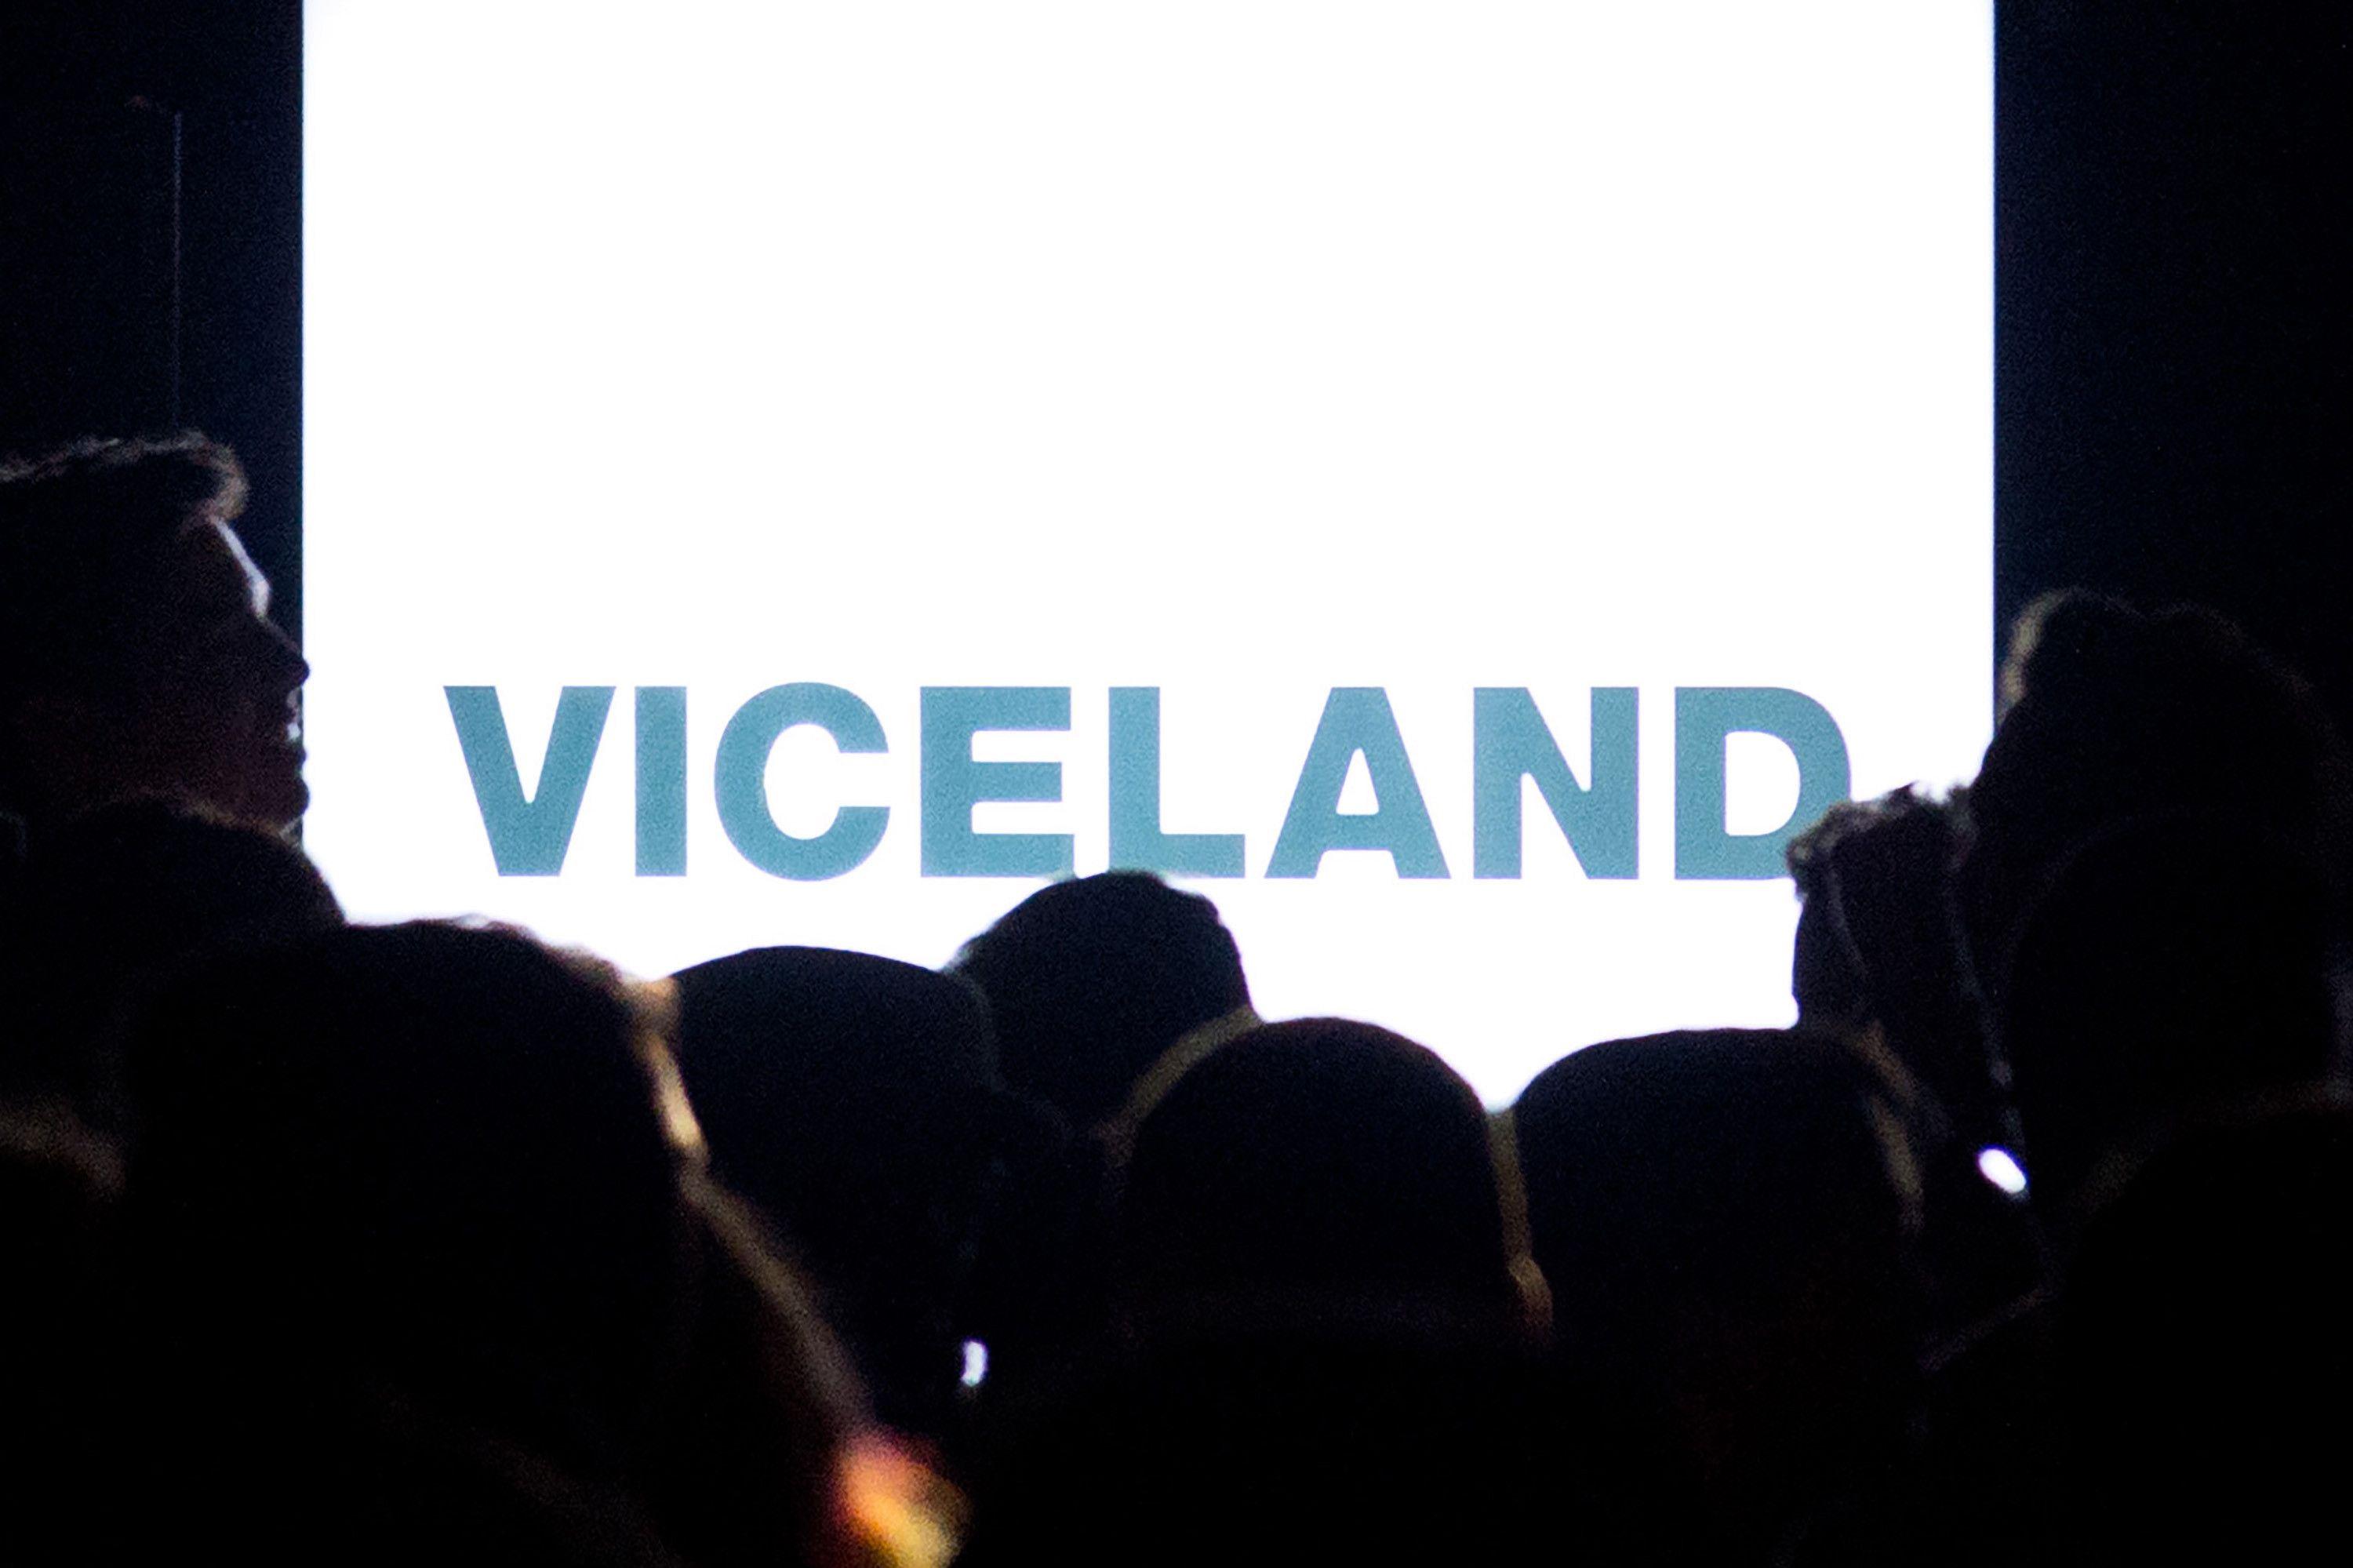 Viceland Logo - Nielsen ratings show Viceland's reach for millennials fell short